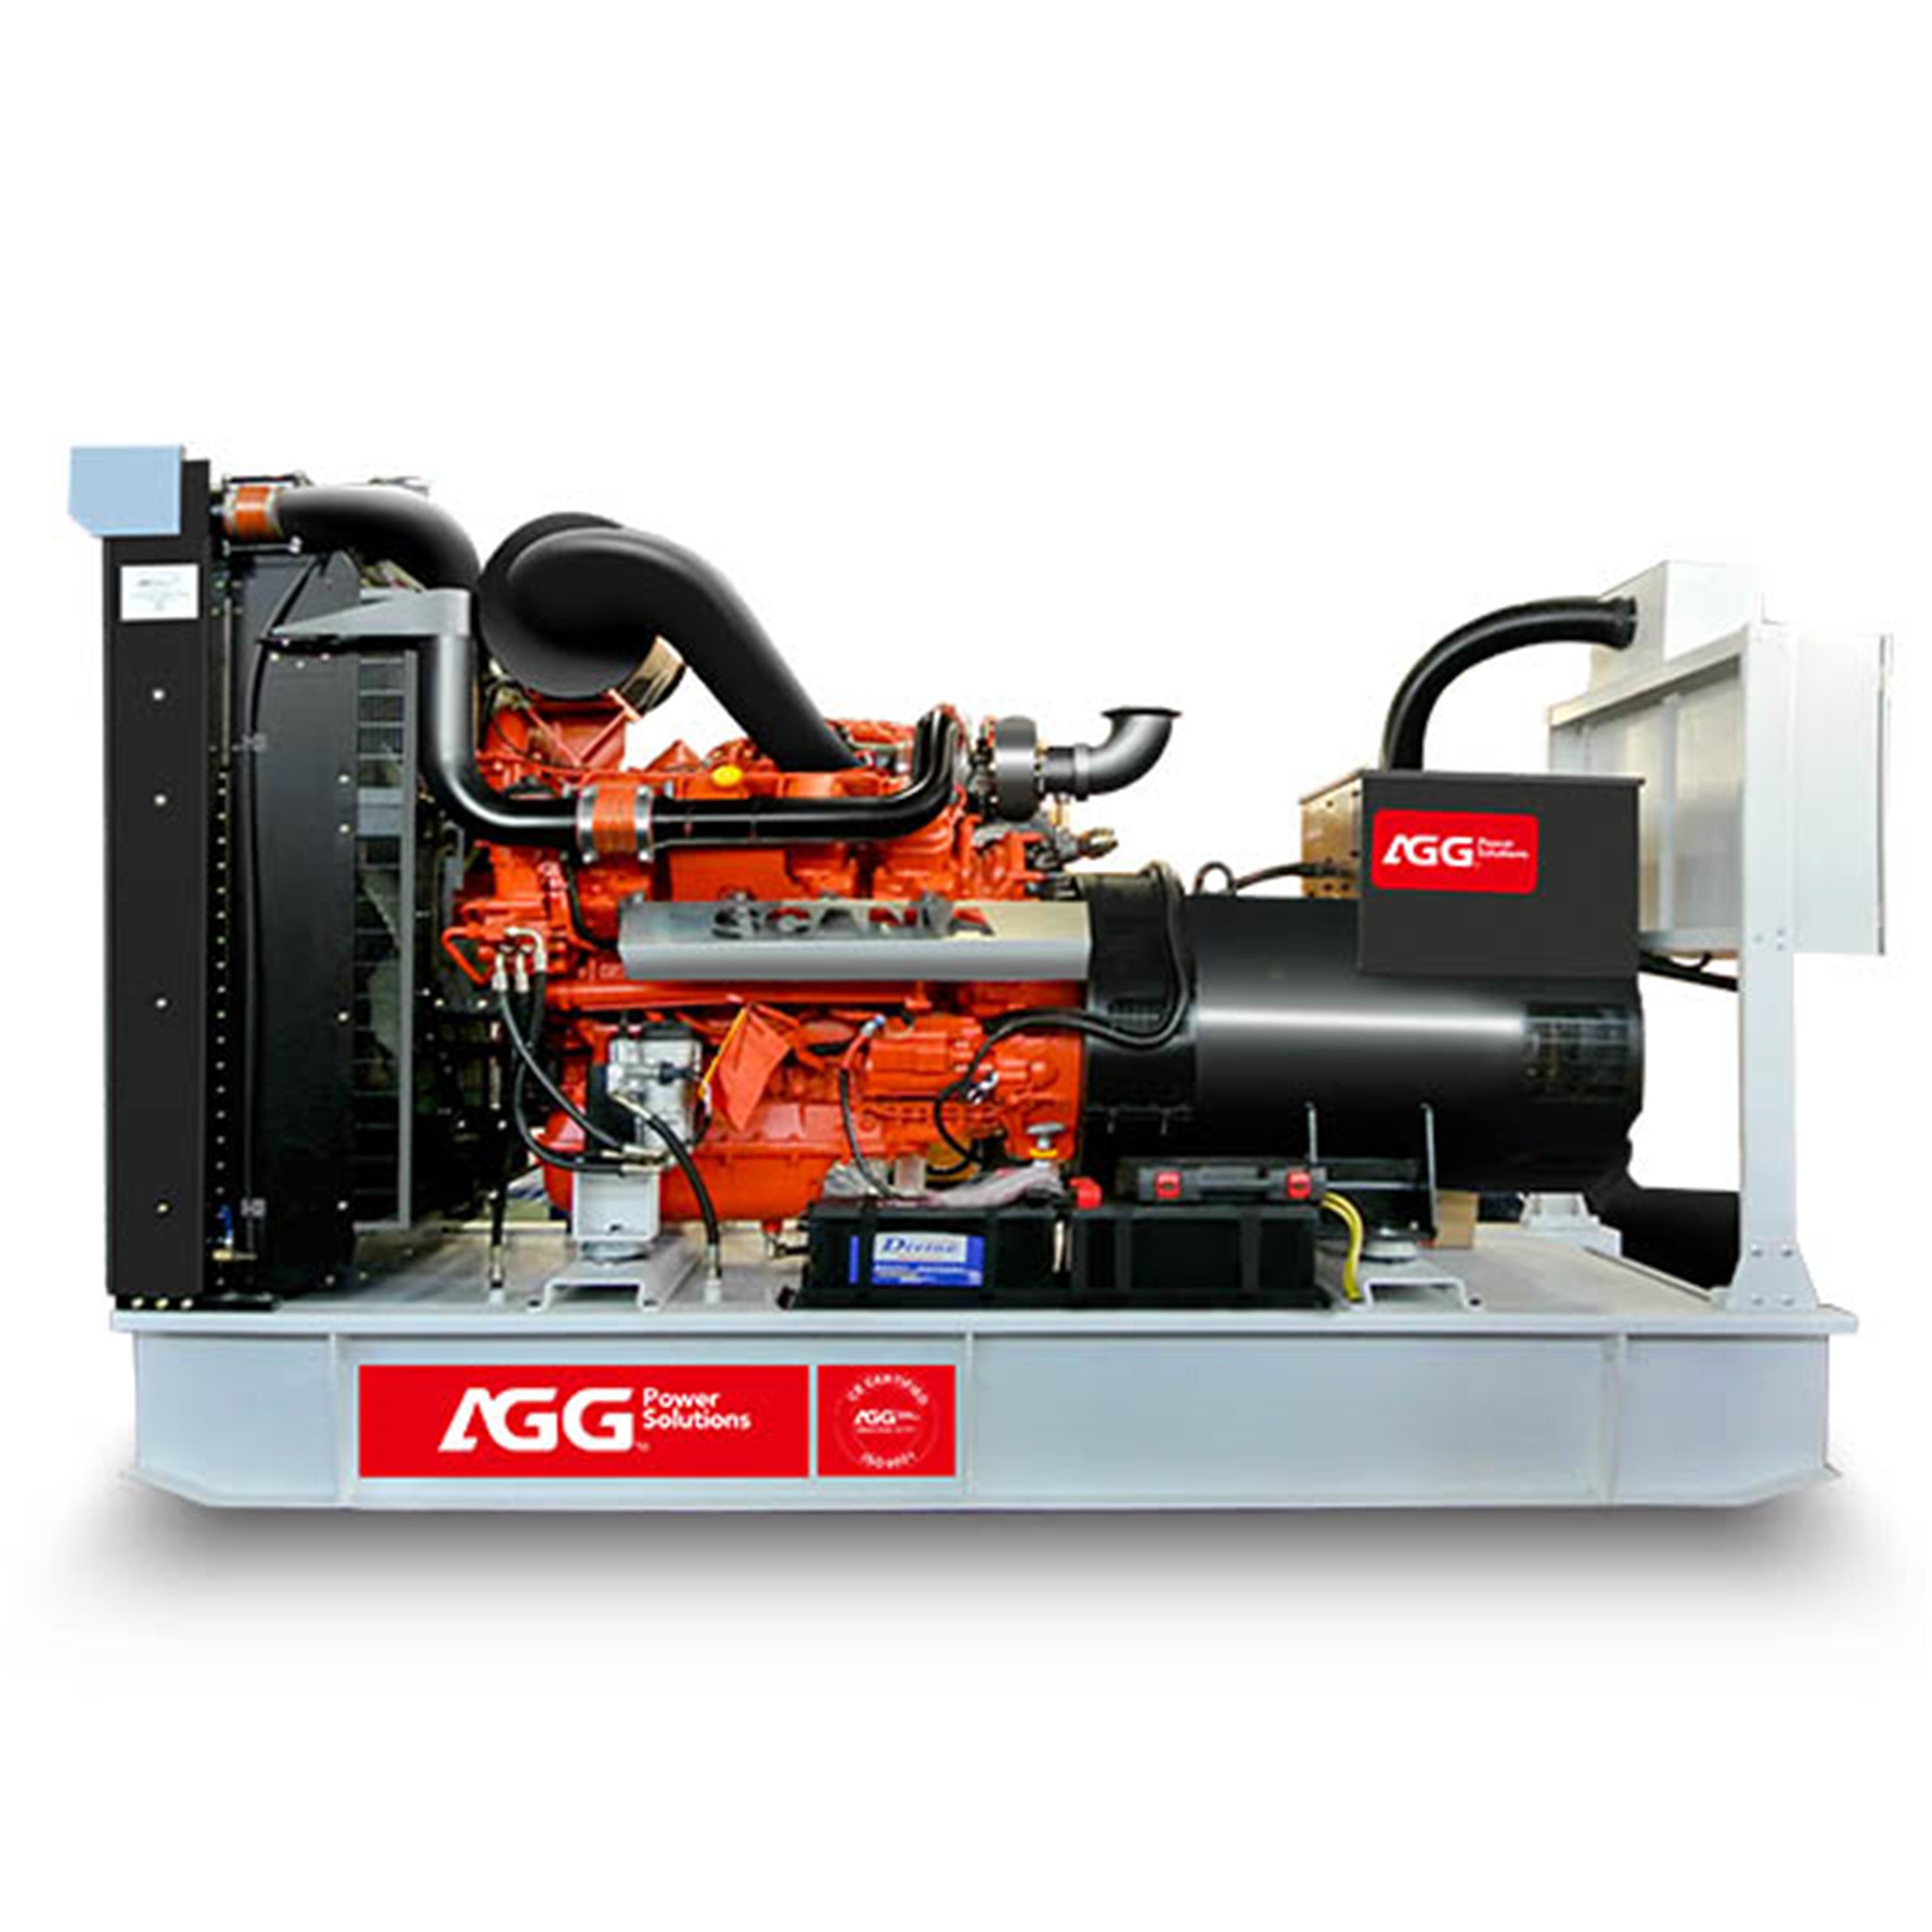 S770E5-50HZ - AGG Power Technology (UK) CO., LTD.